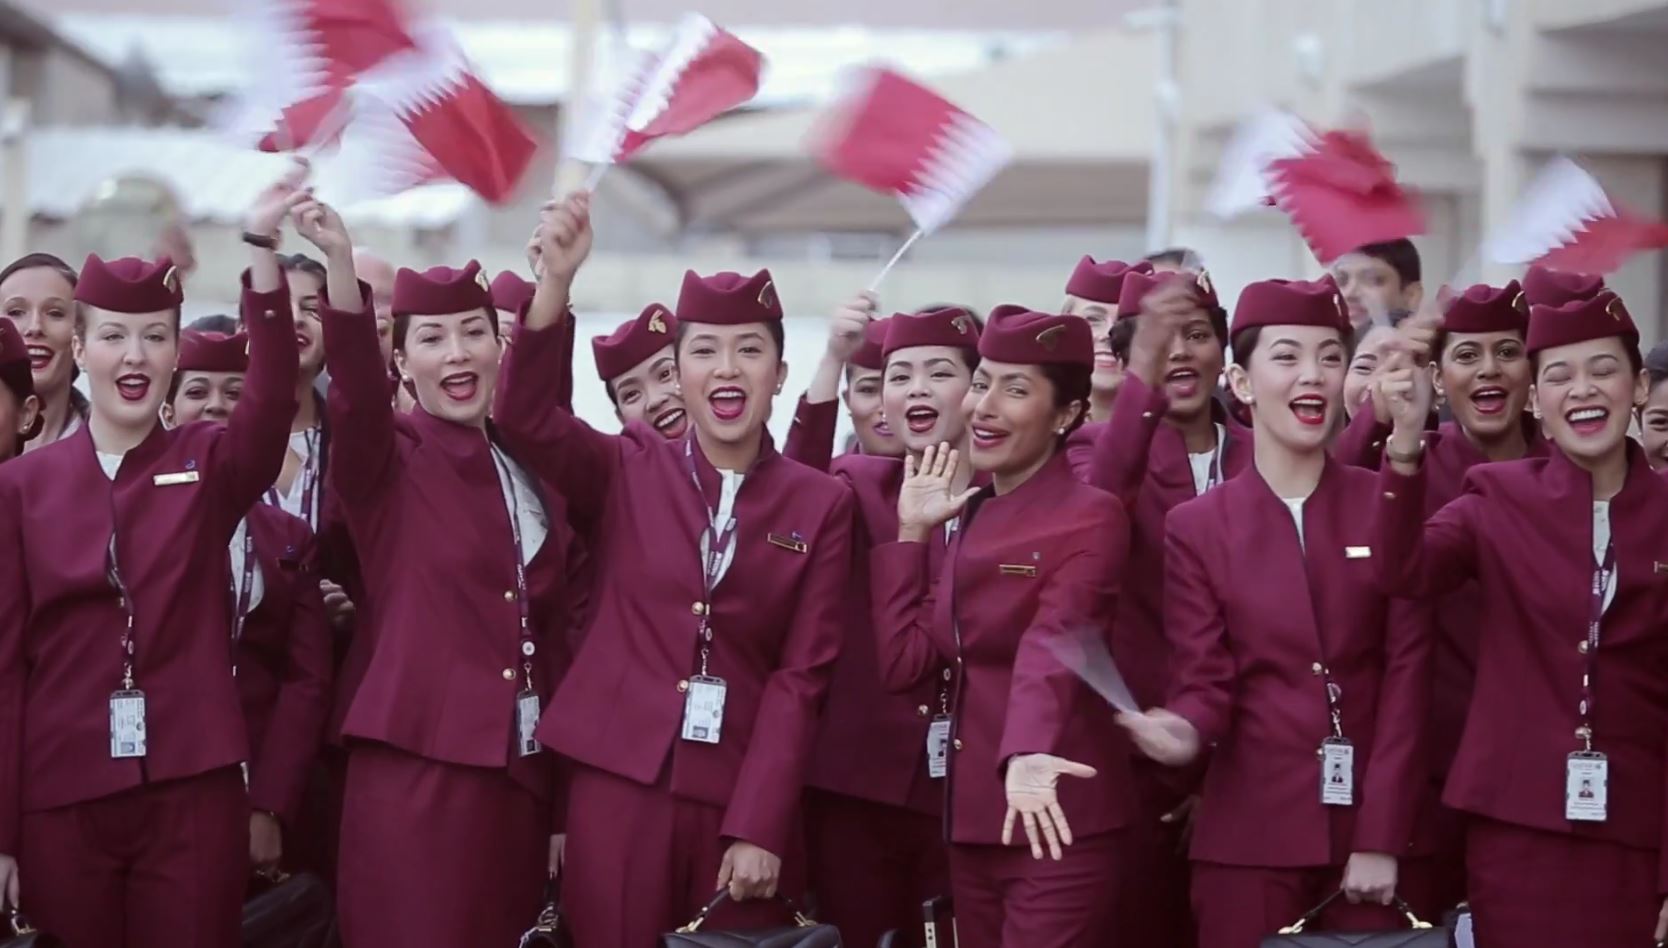 Qatar Airways welcomes its new cabin crew